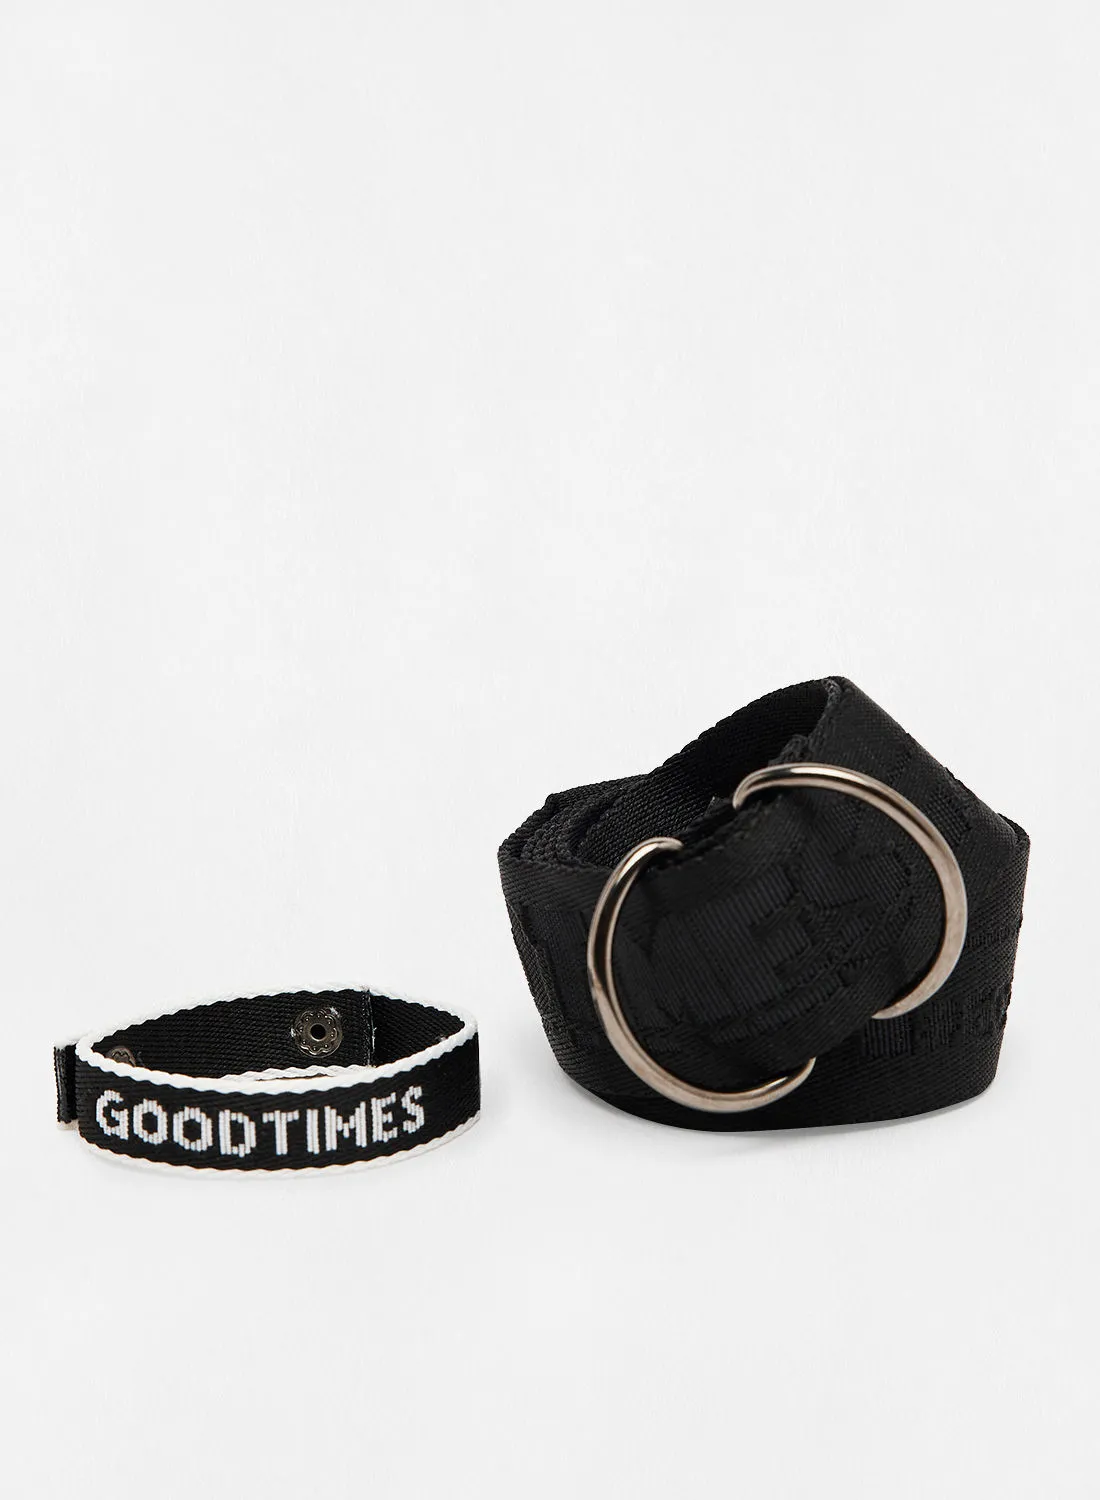 Goodtimes Van Allen D-Ring Belt and Bracelet Set Black